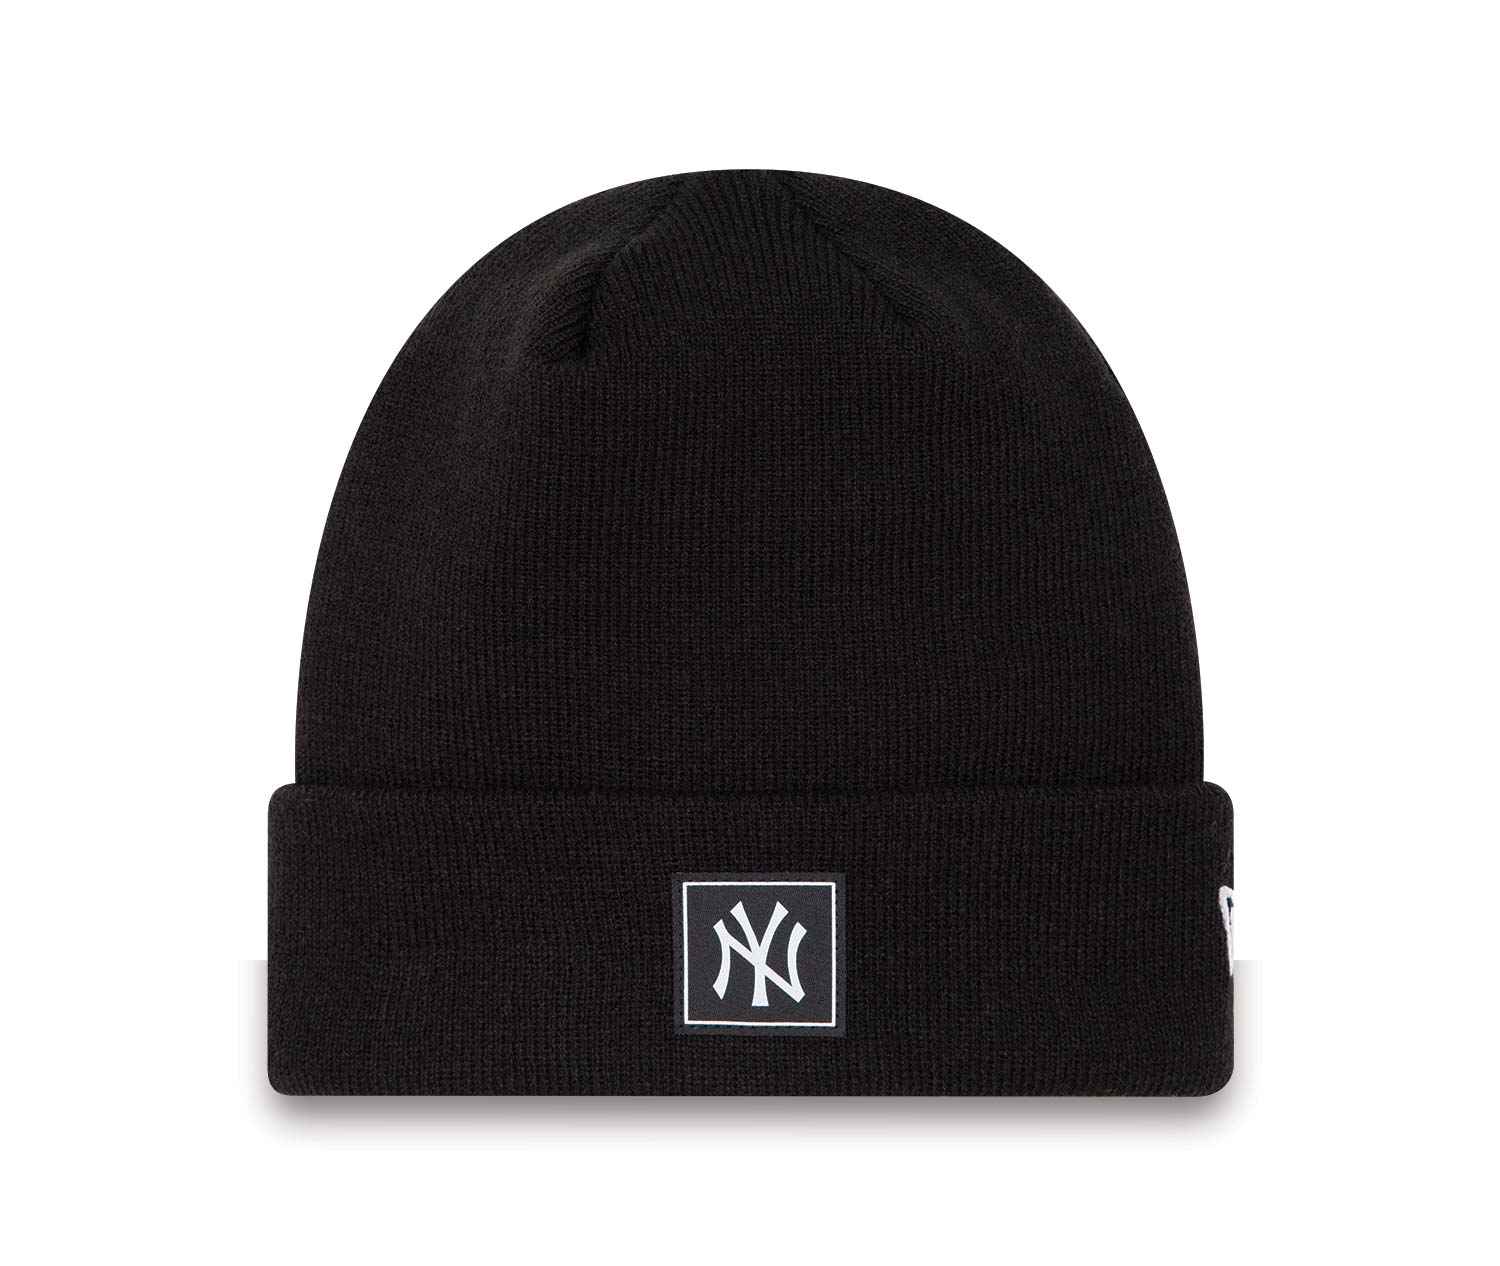 New York Yankees Team Cuff Black Beanie Hat